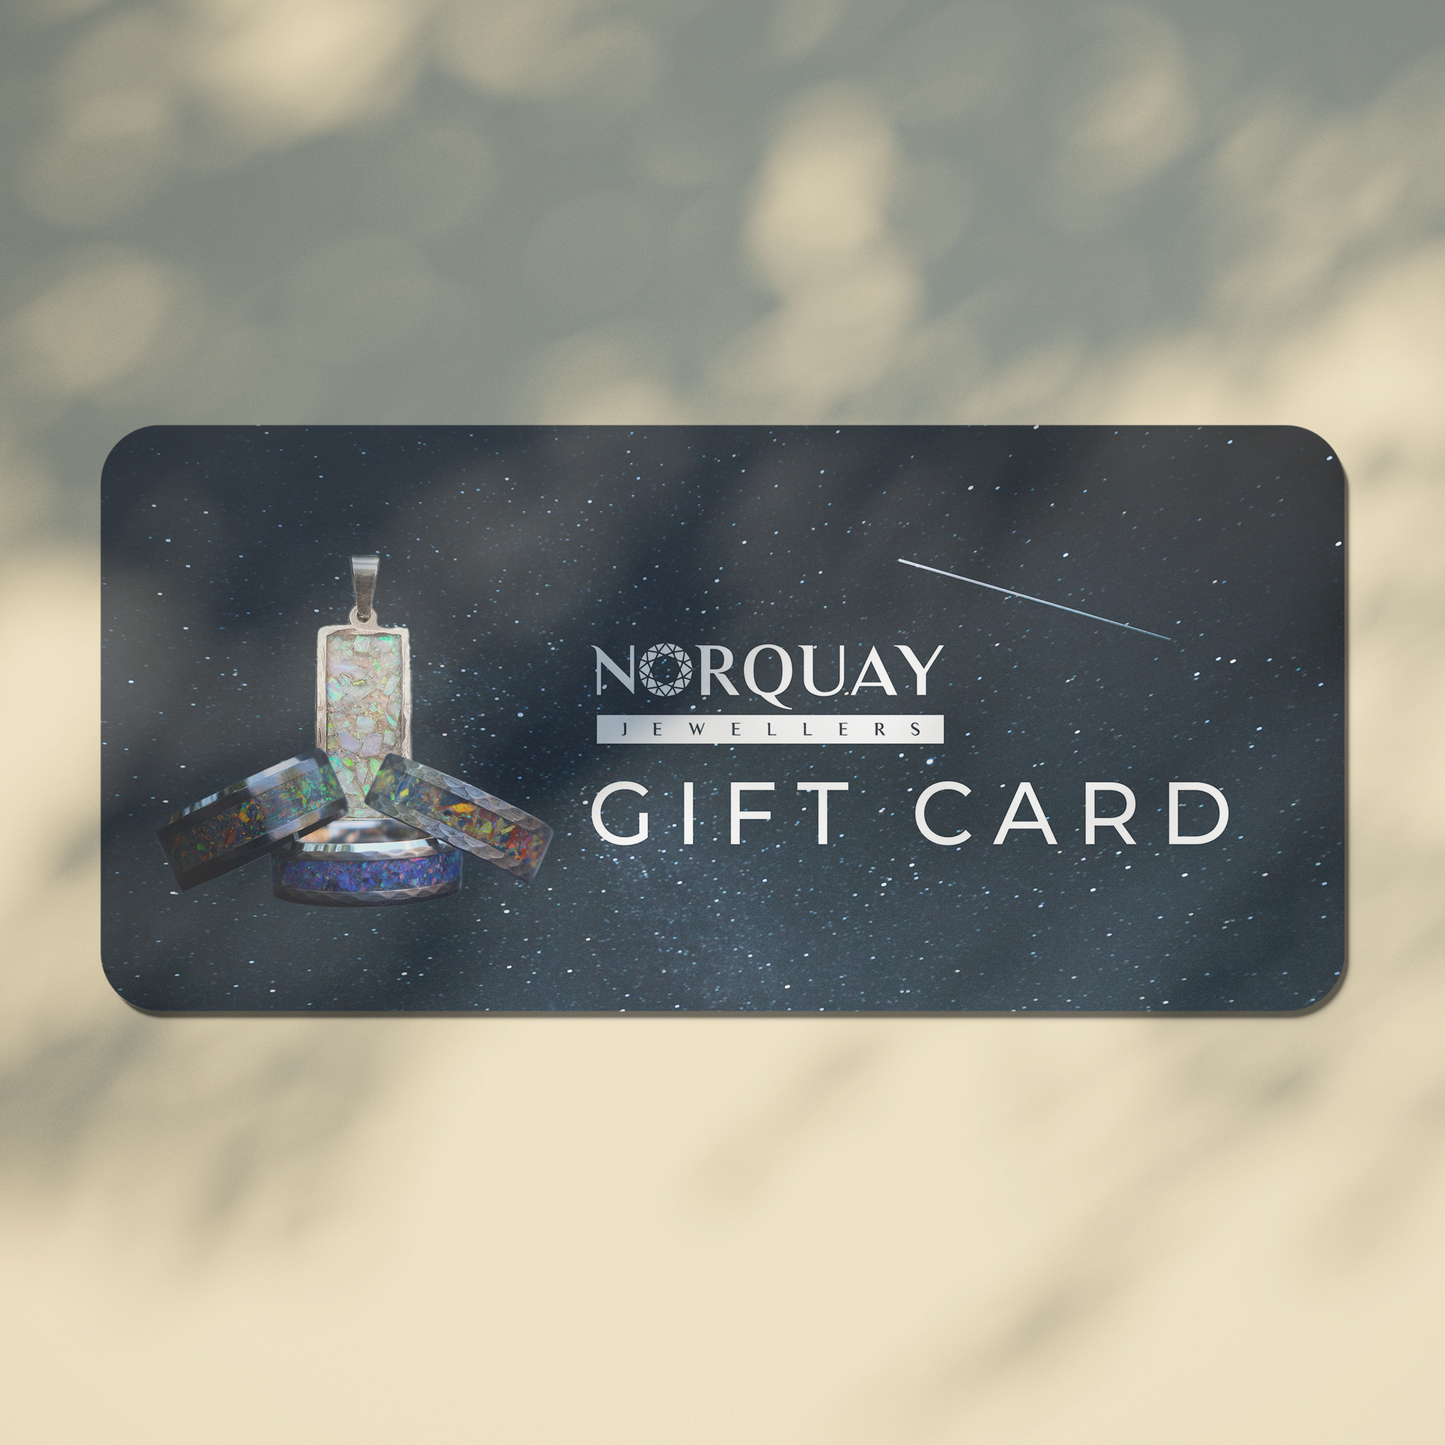 Norquay Jewellers Gift Card